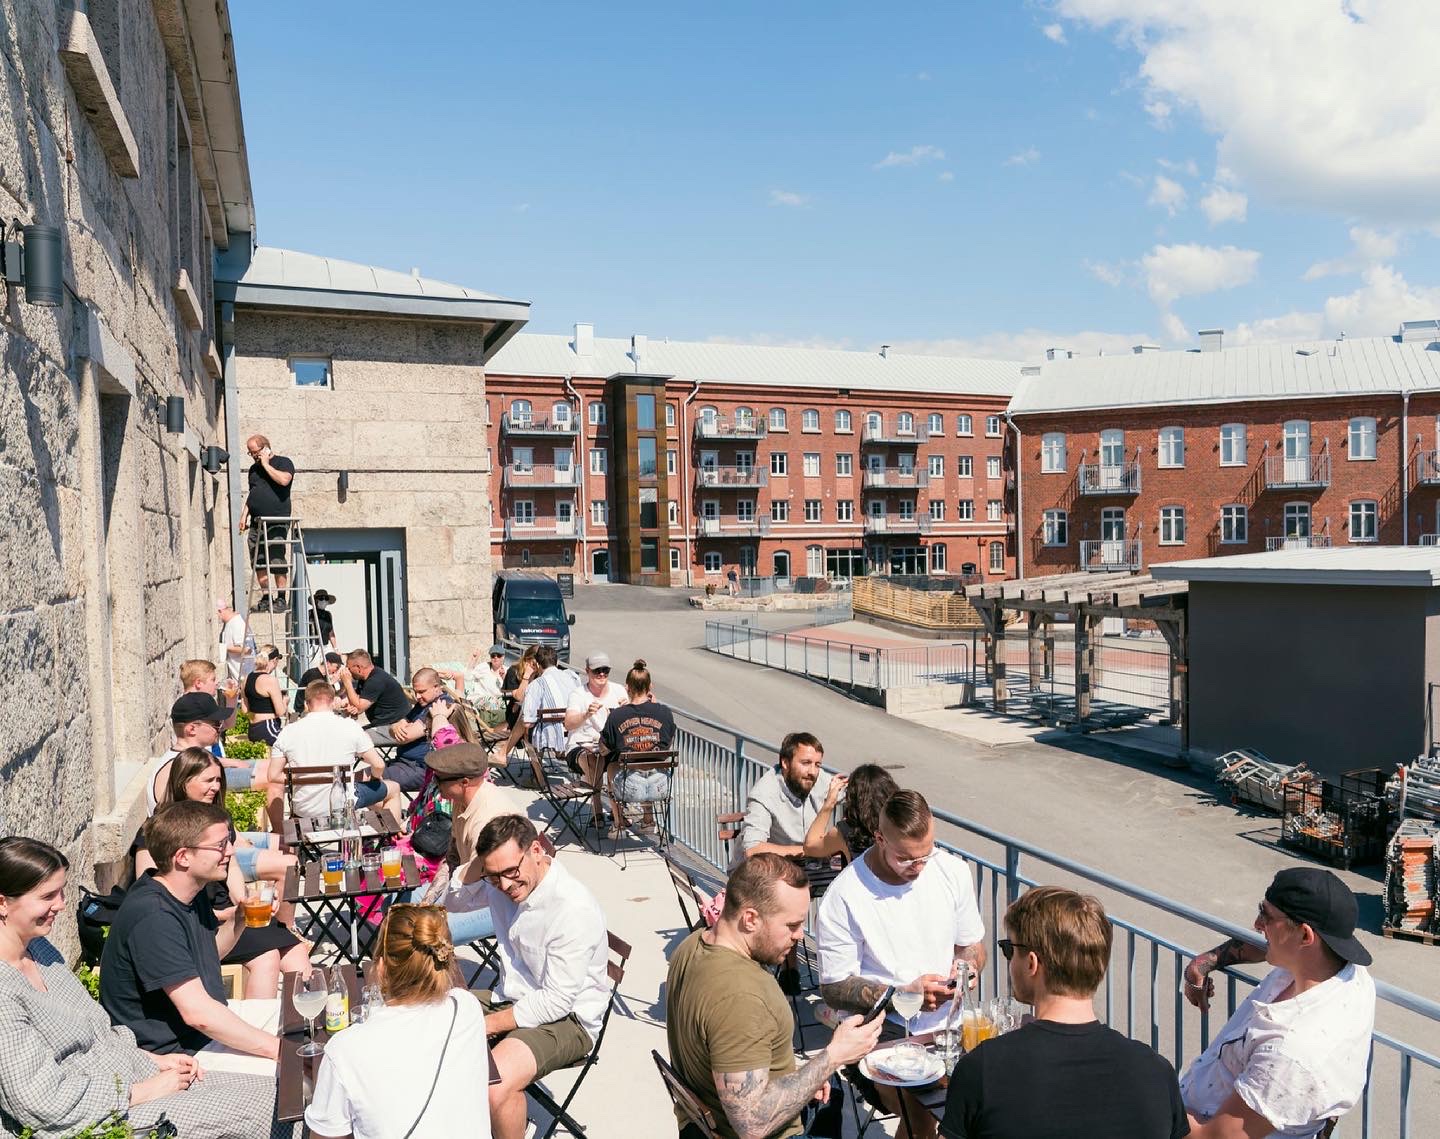 People enjoying a sunny day in a brewery's sun terrace in Turku, Finland